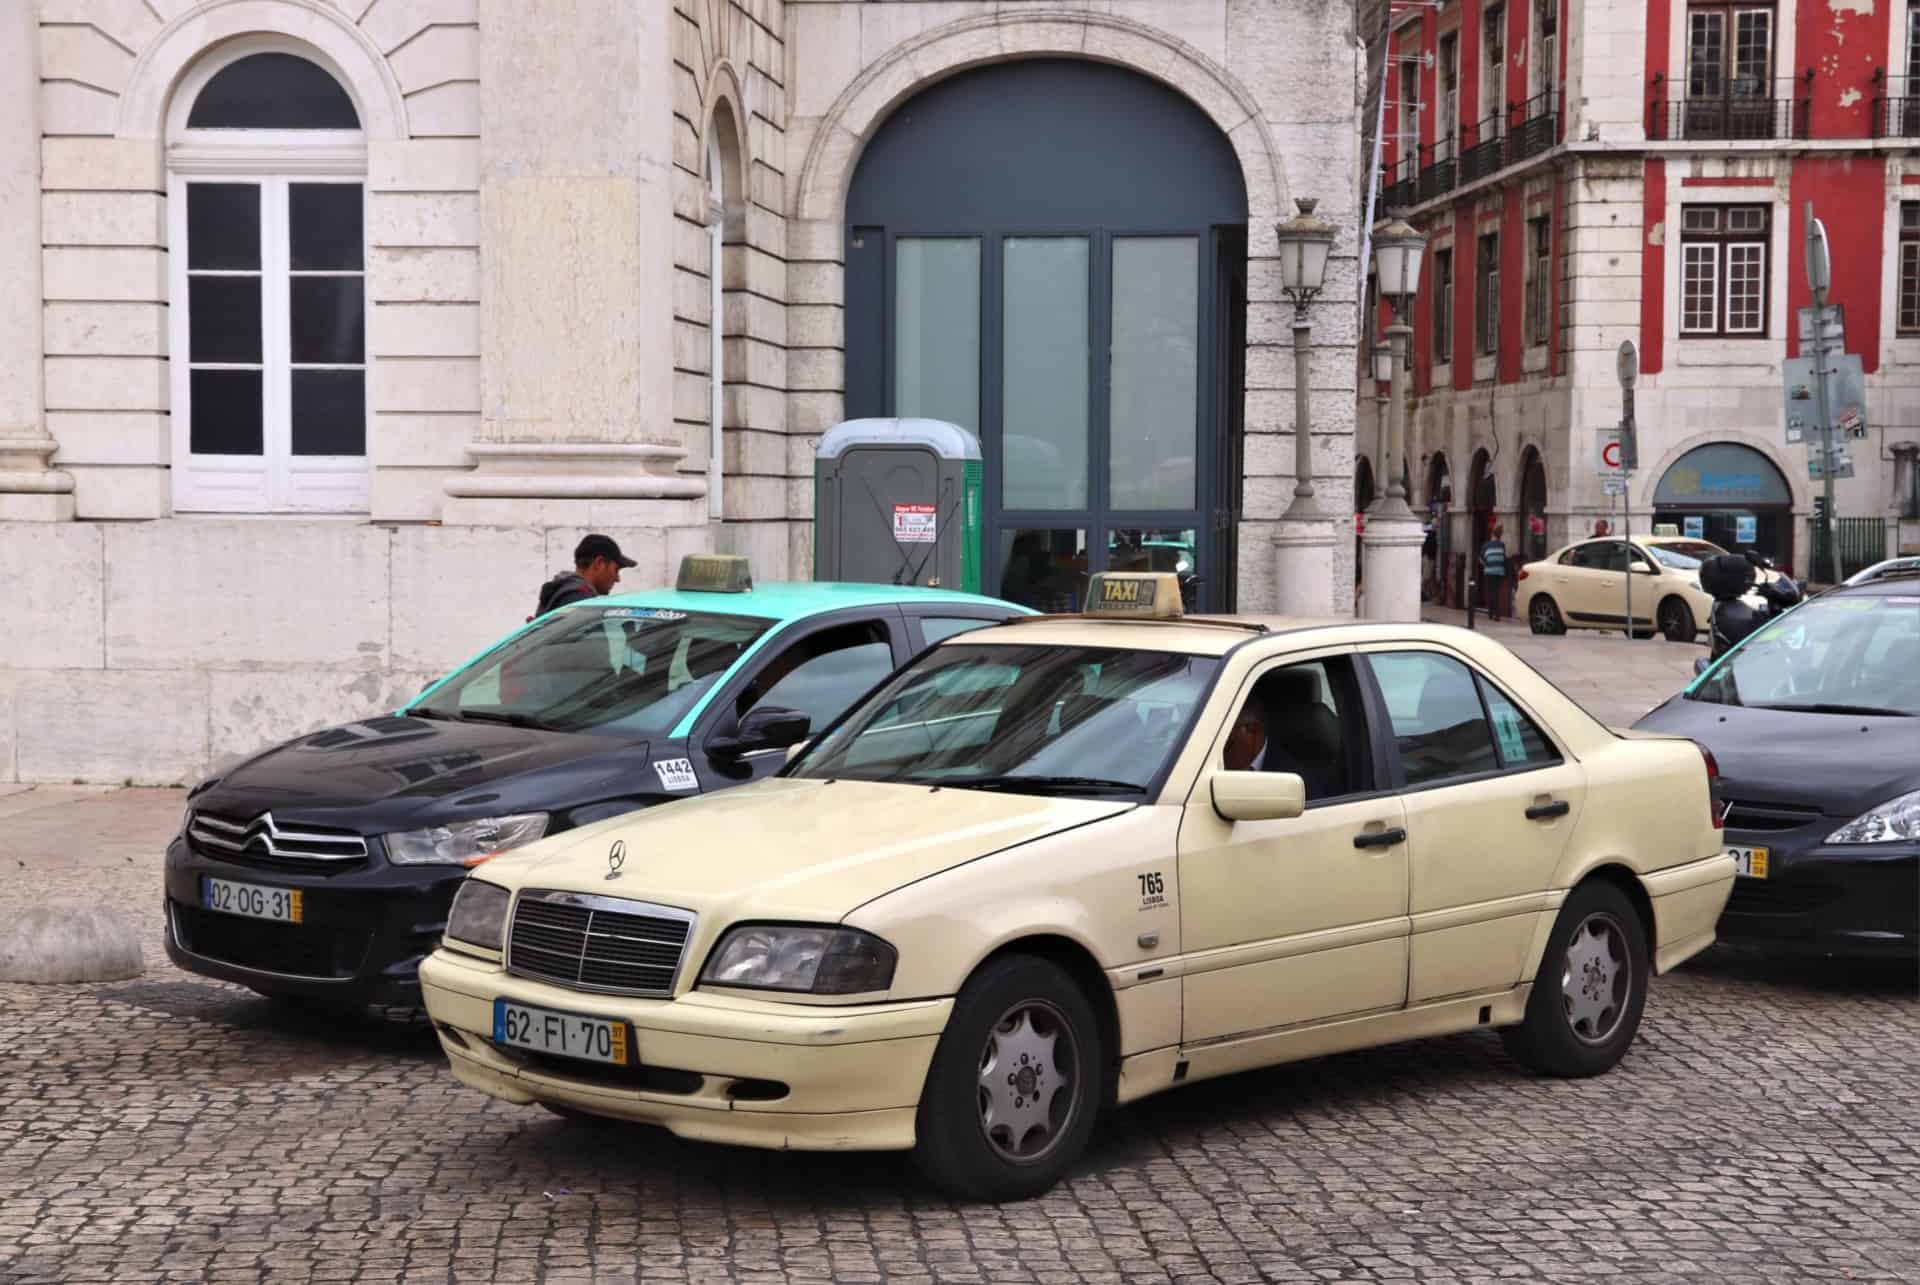 ancien taxi beige